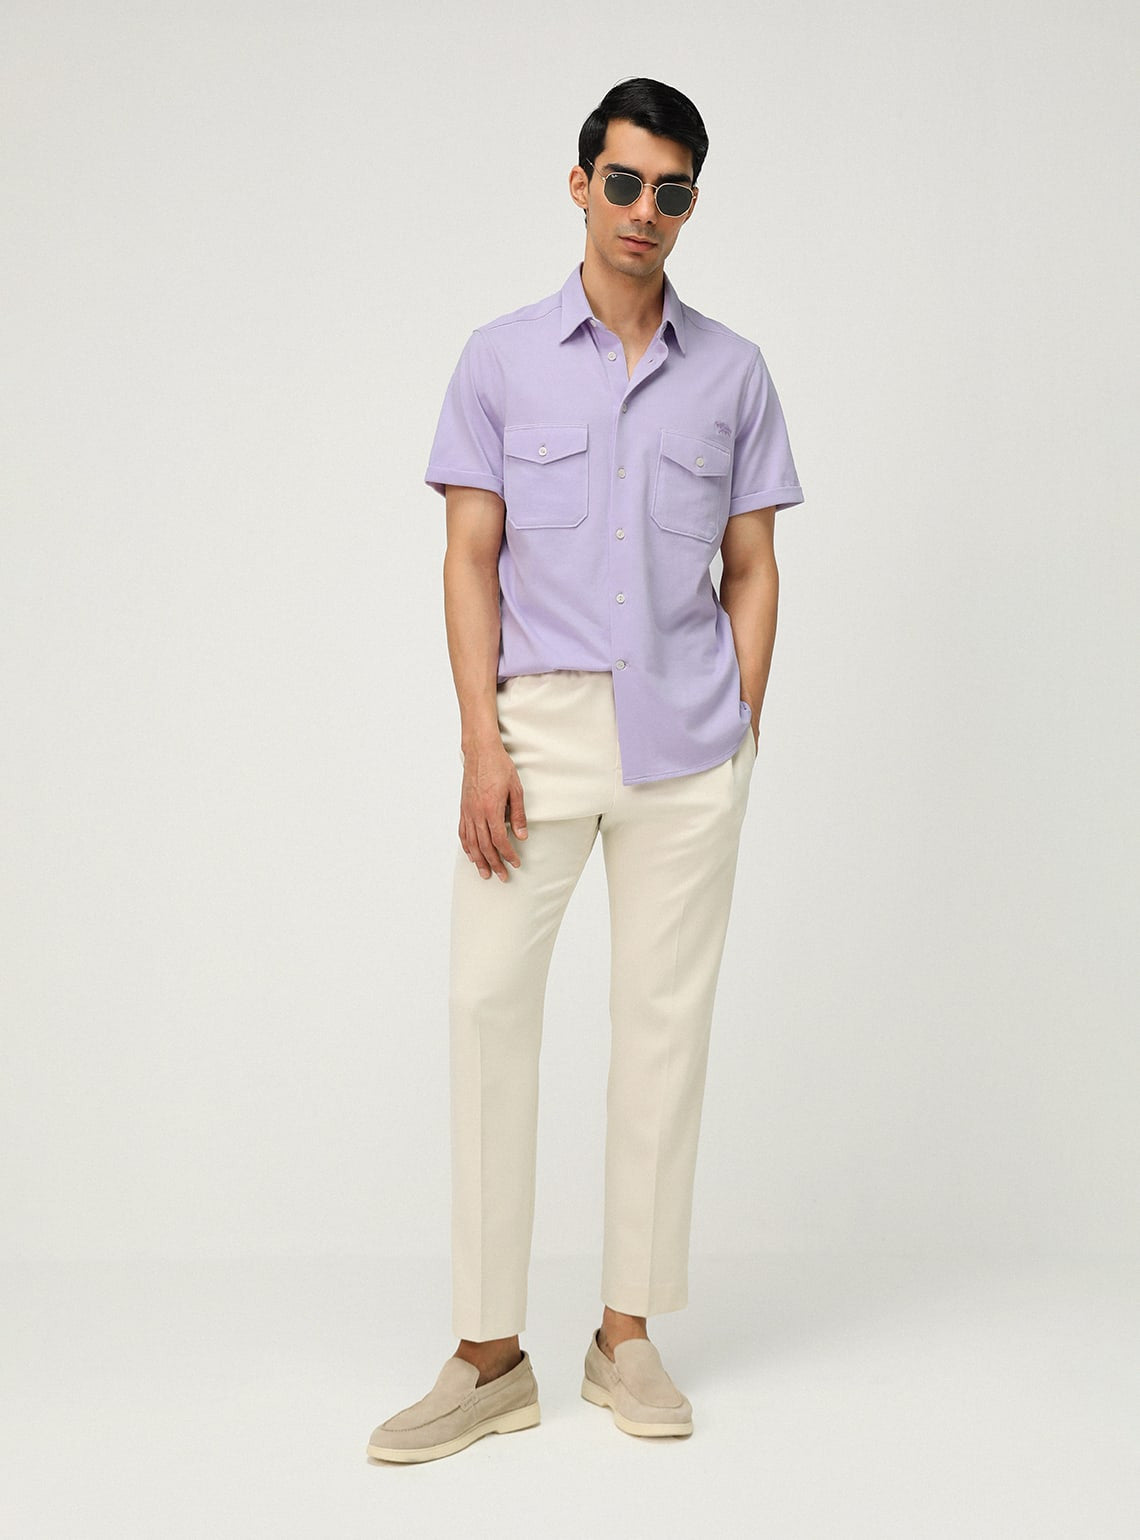 English Lavender Shirt-Half